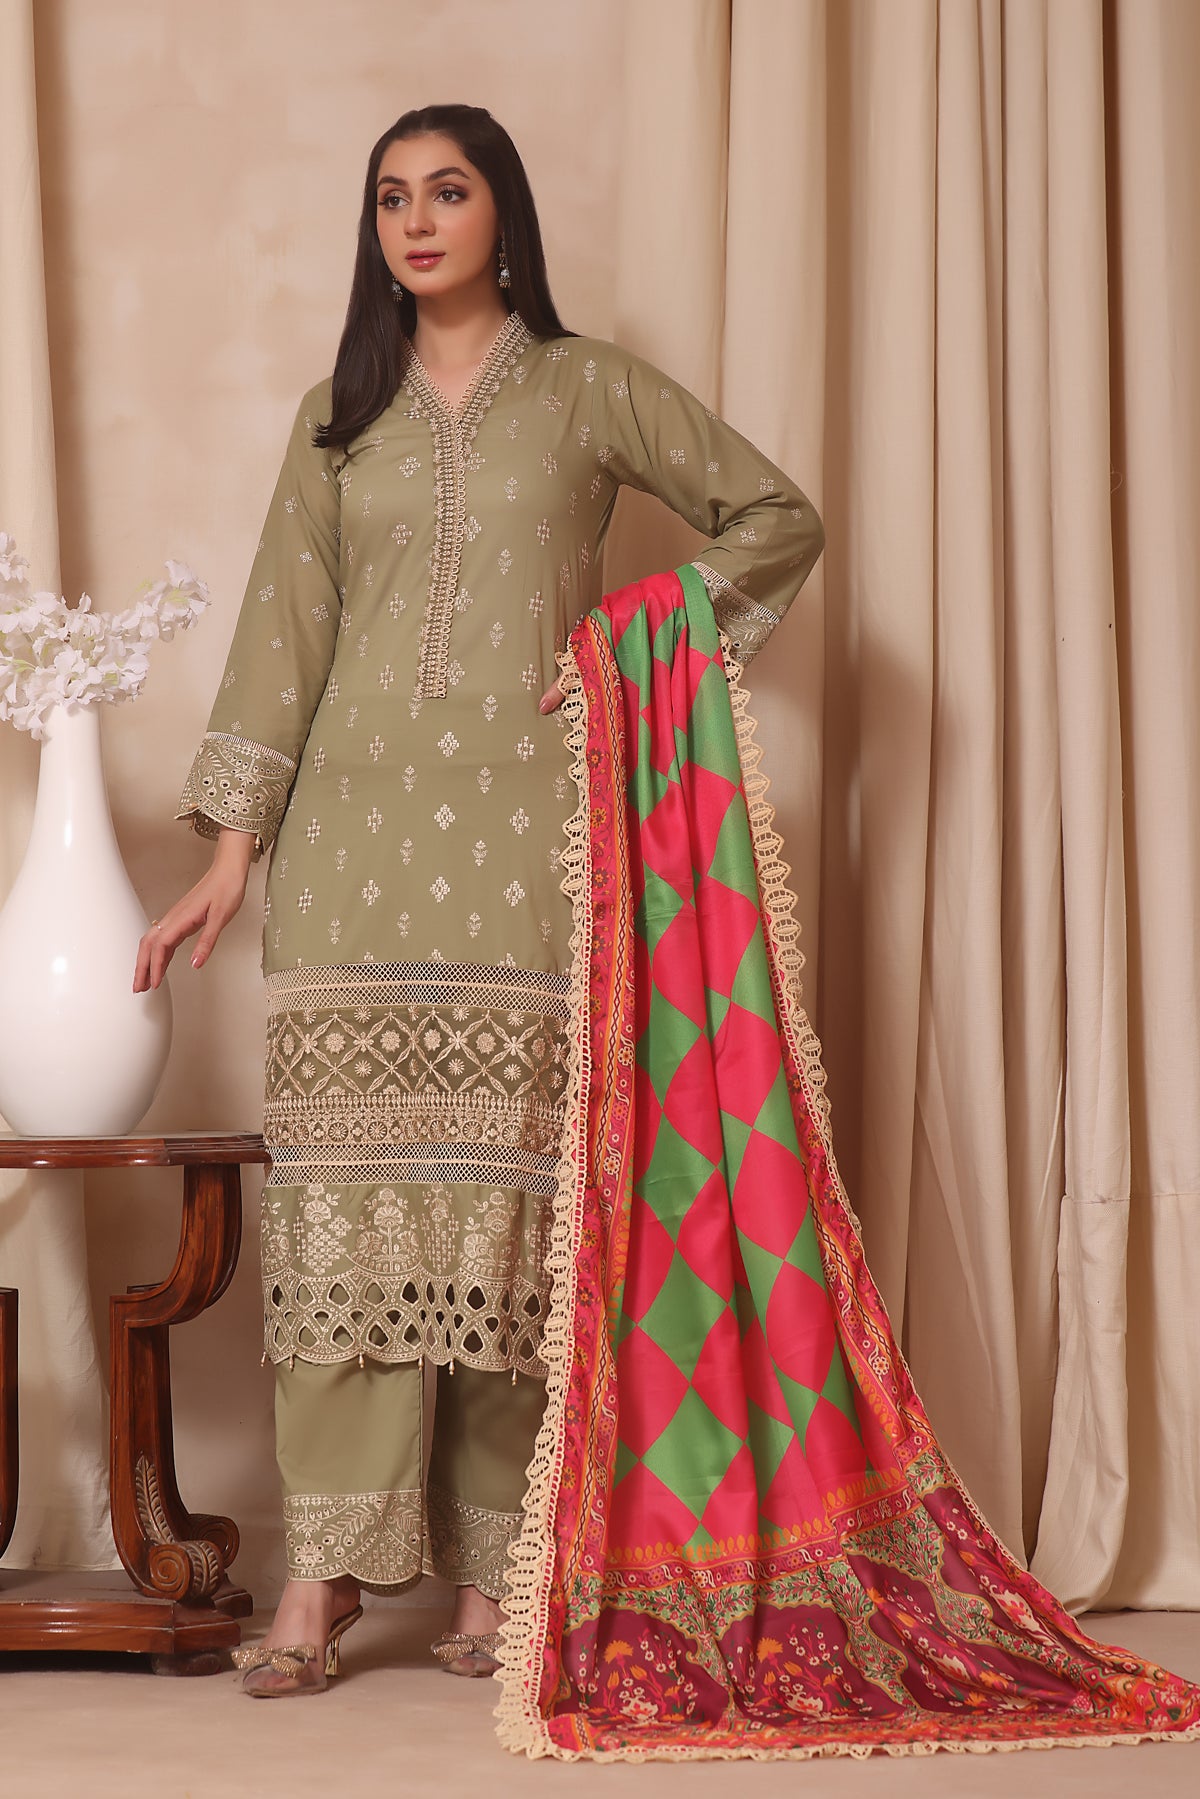 Laal'En 3 Piece Suit - Zainab Chottani